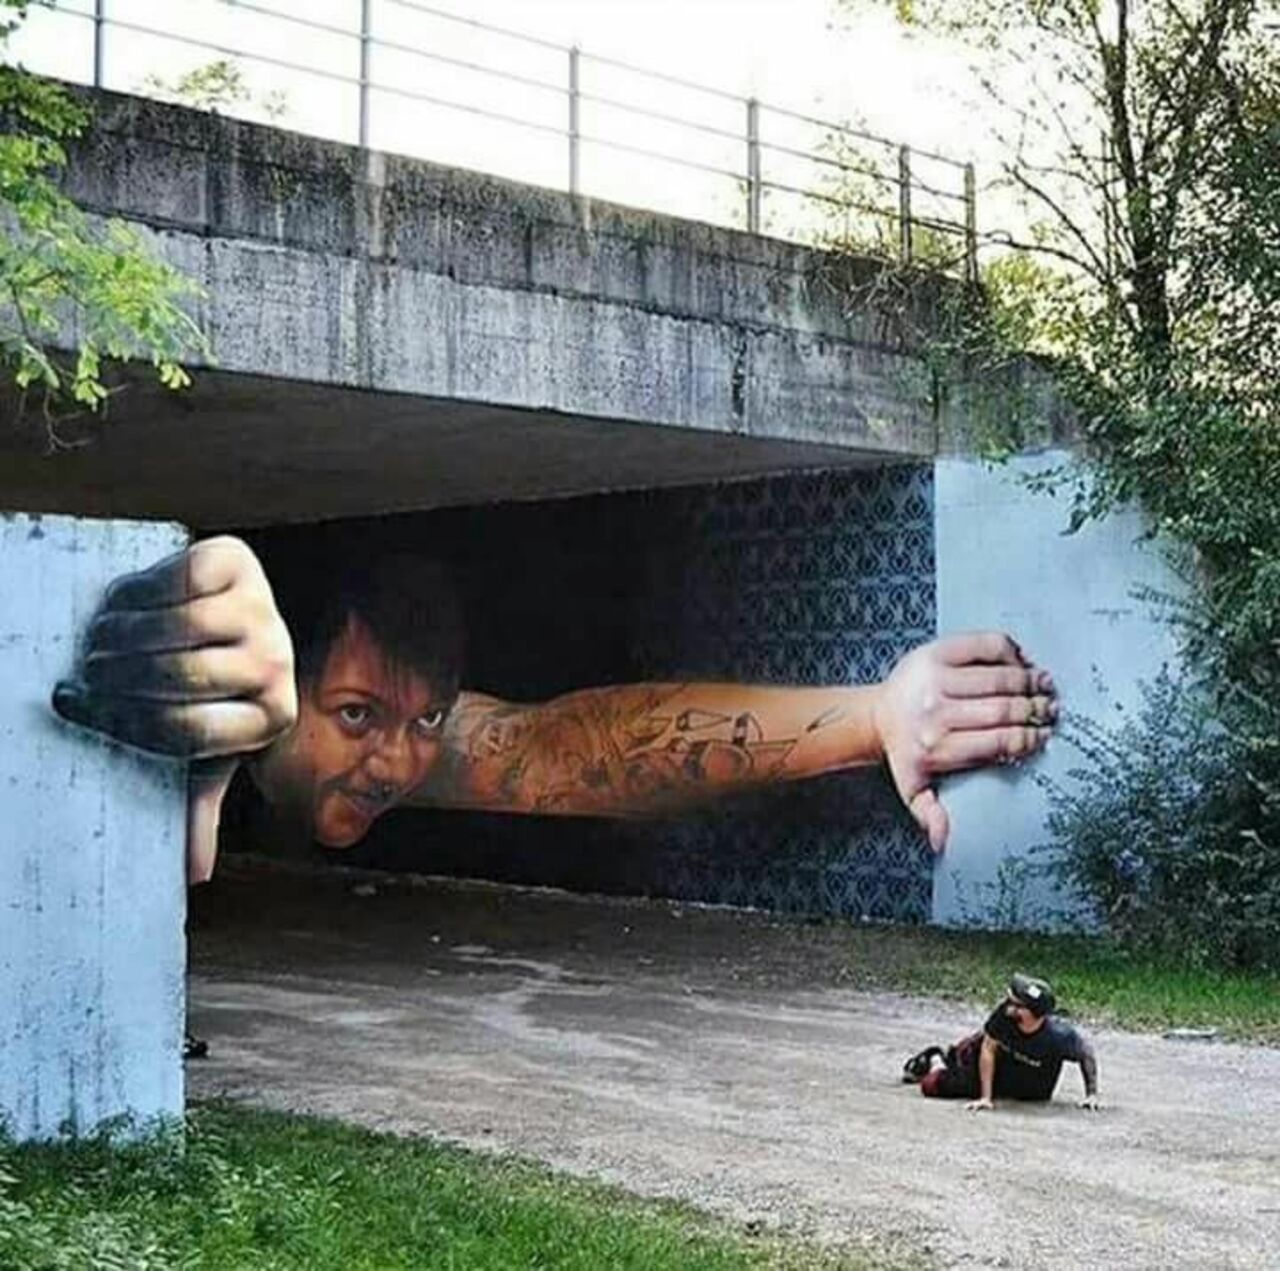 By GMan #streetart #mural #graffiti #art https://t.co/O1NMb8bkSt